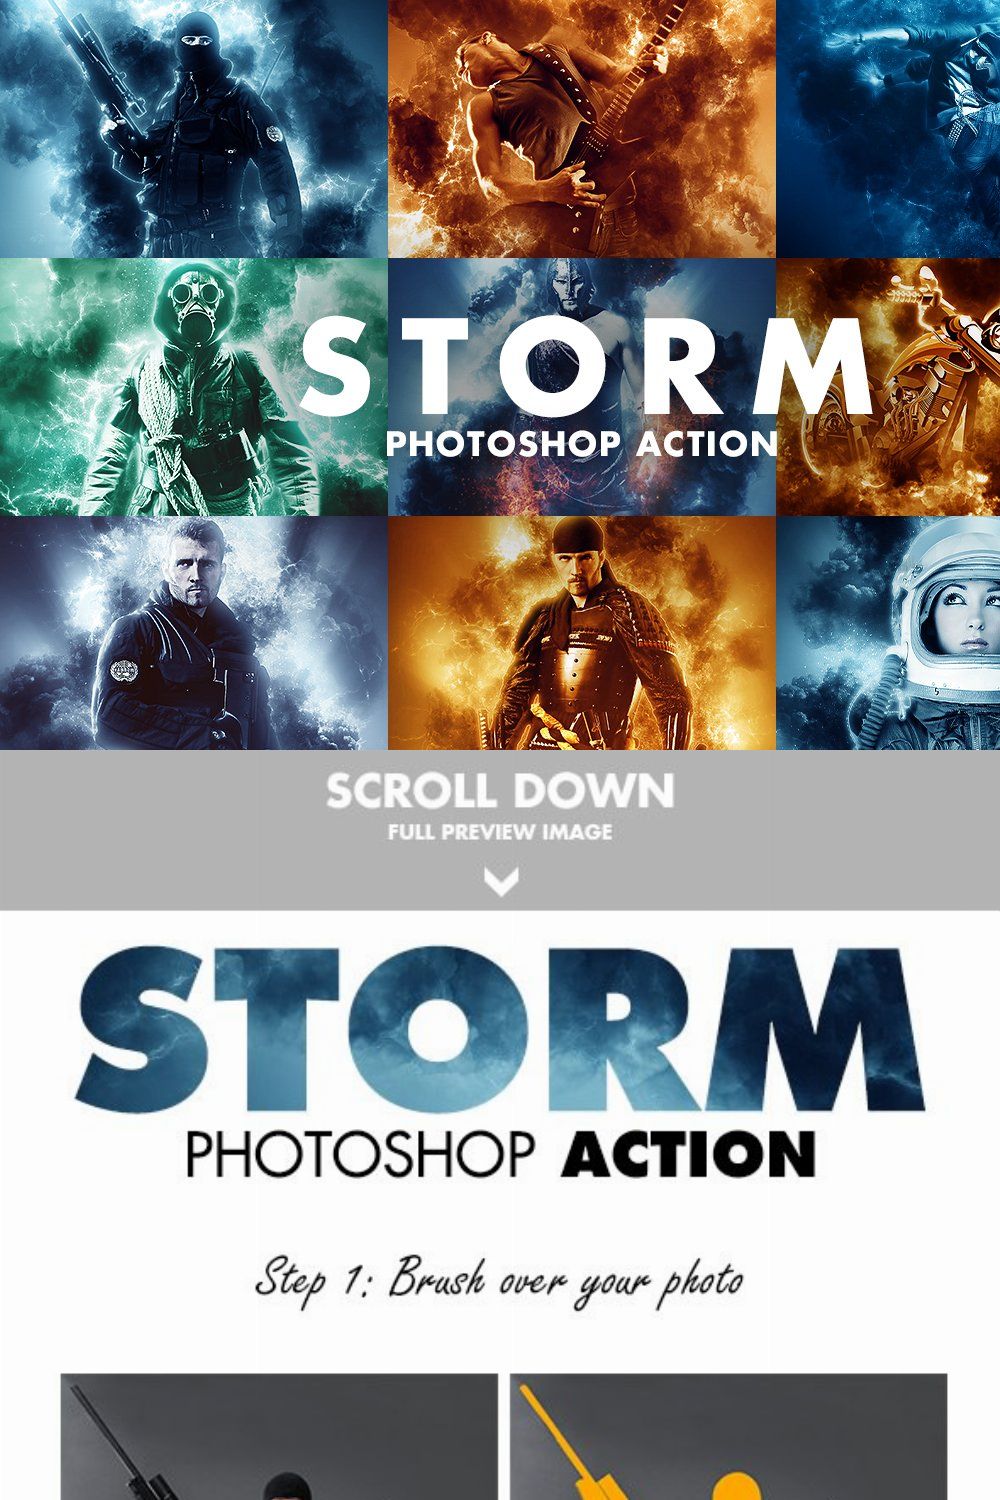 Storm Photoshop Action pinterest preview image.